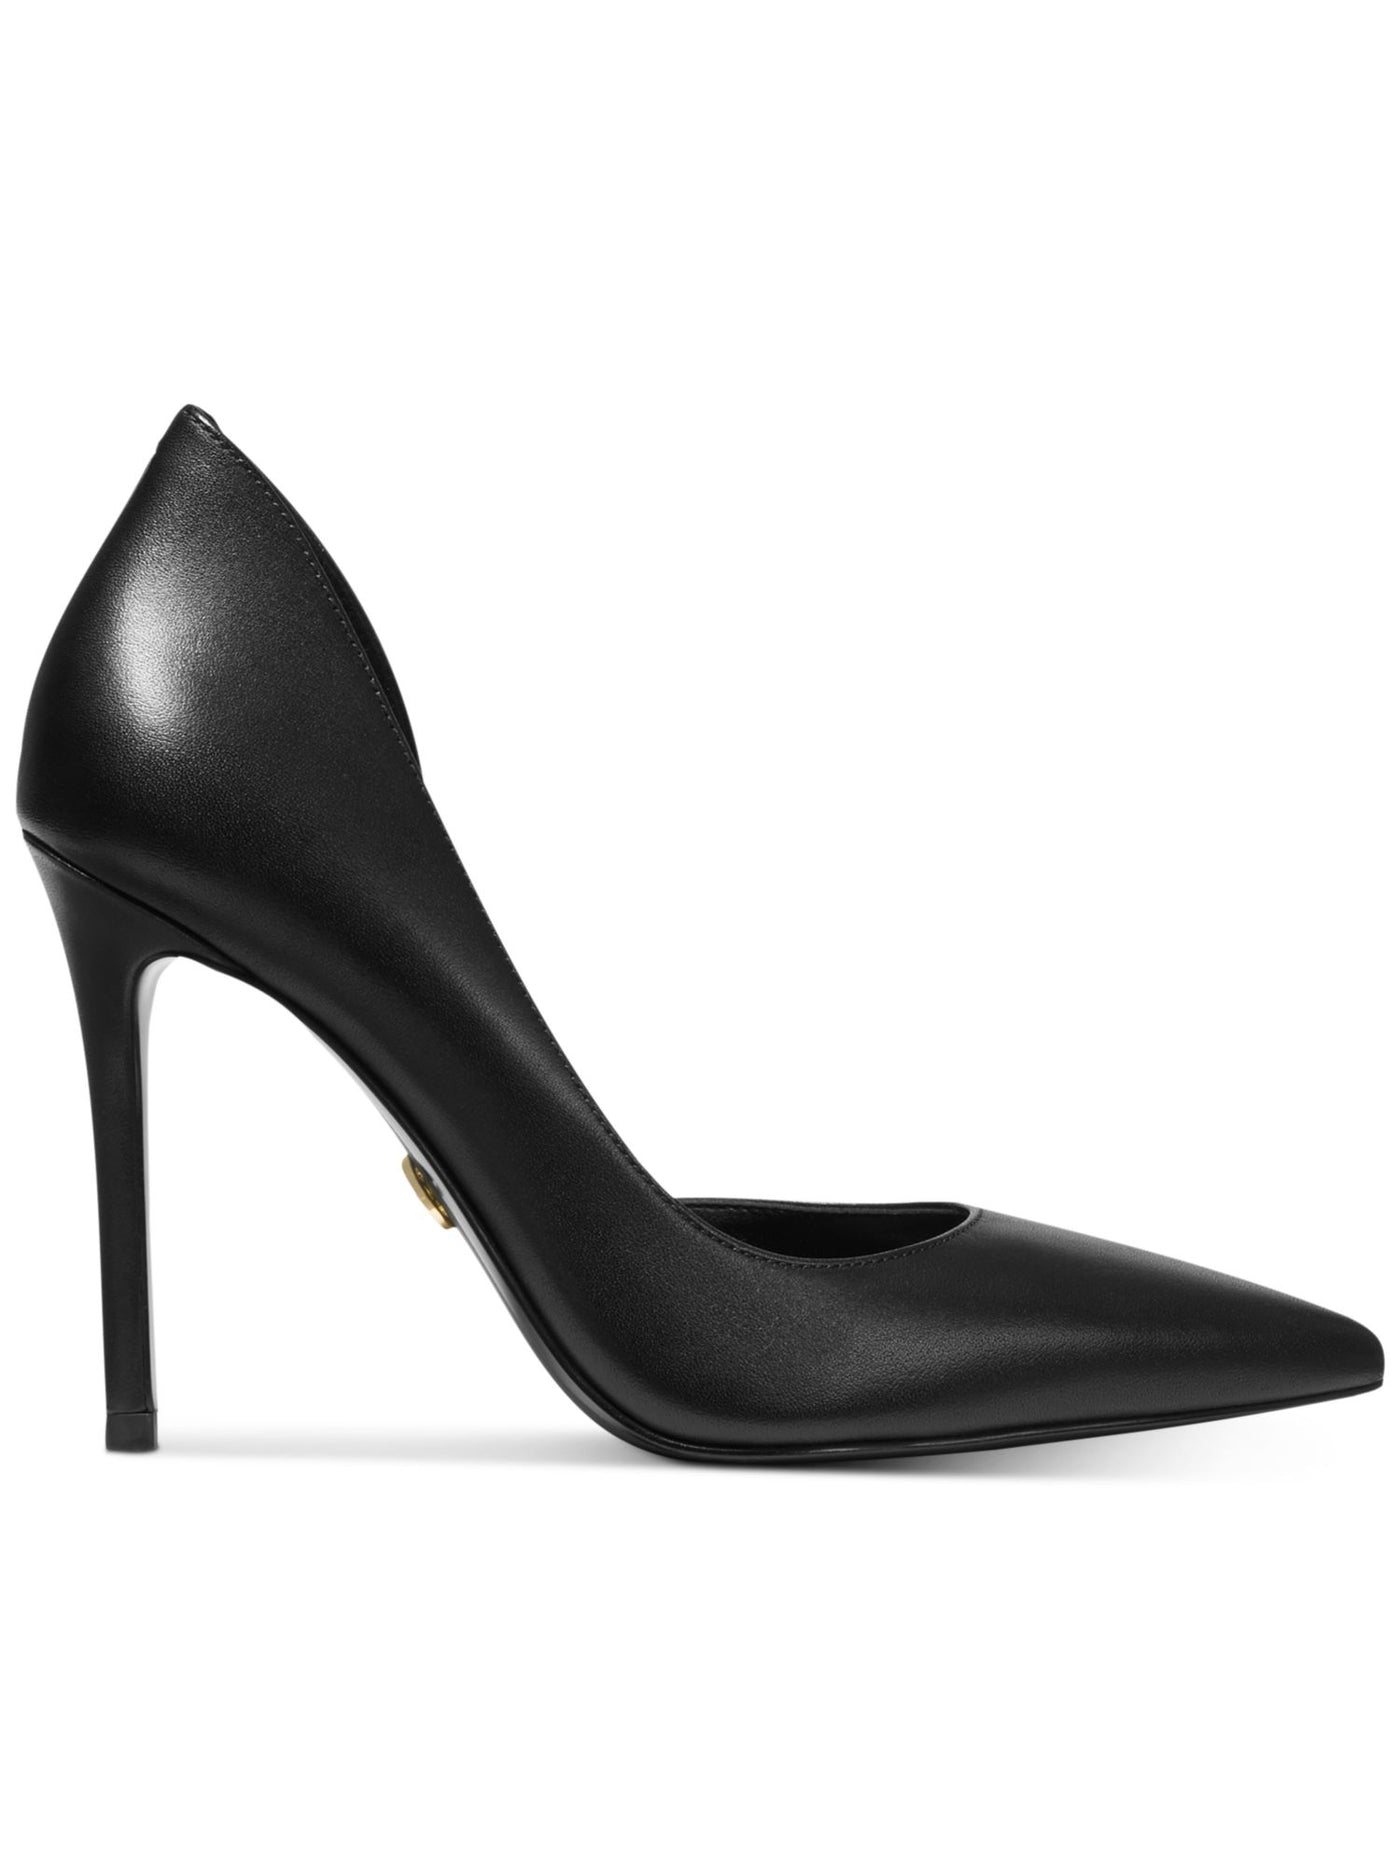 MICHAEL KORS Womens Black Dorsay Padded Comfort Keke Pointed Toe Stiletto Slip On Leather Pumps Shoes 9.5 M